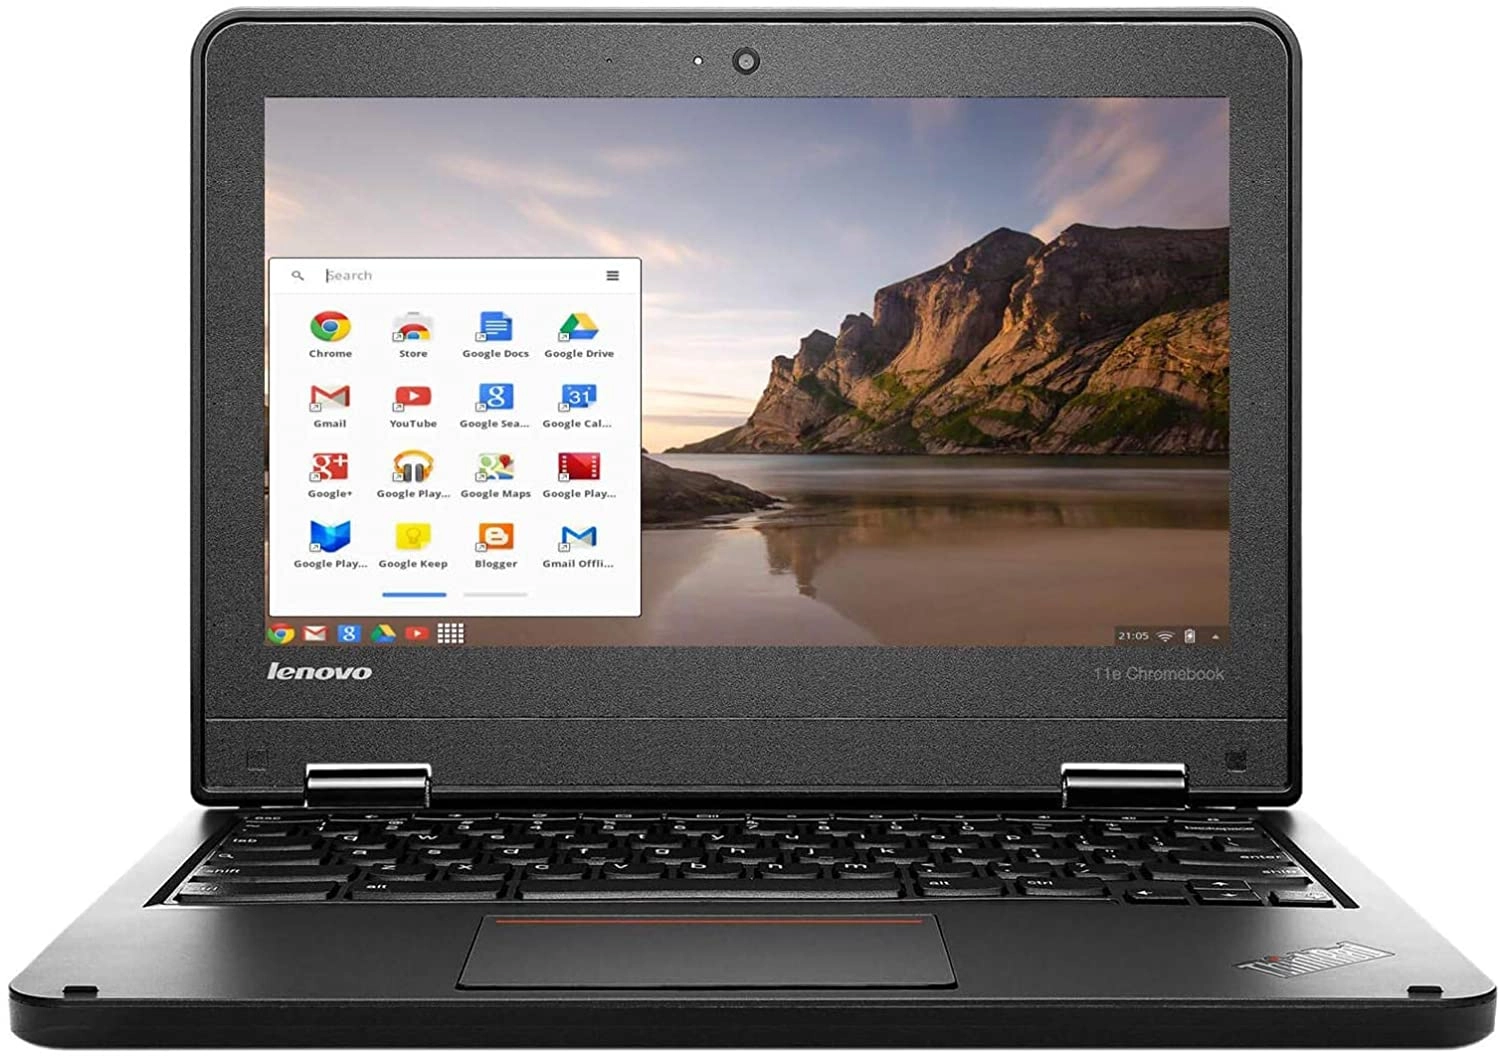 Lenovo ThinkPad Yoga 11e Chrome laptop image